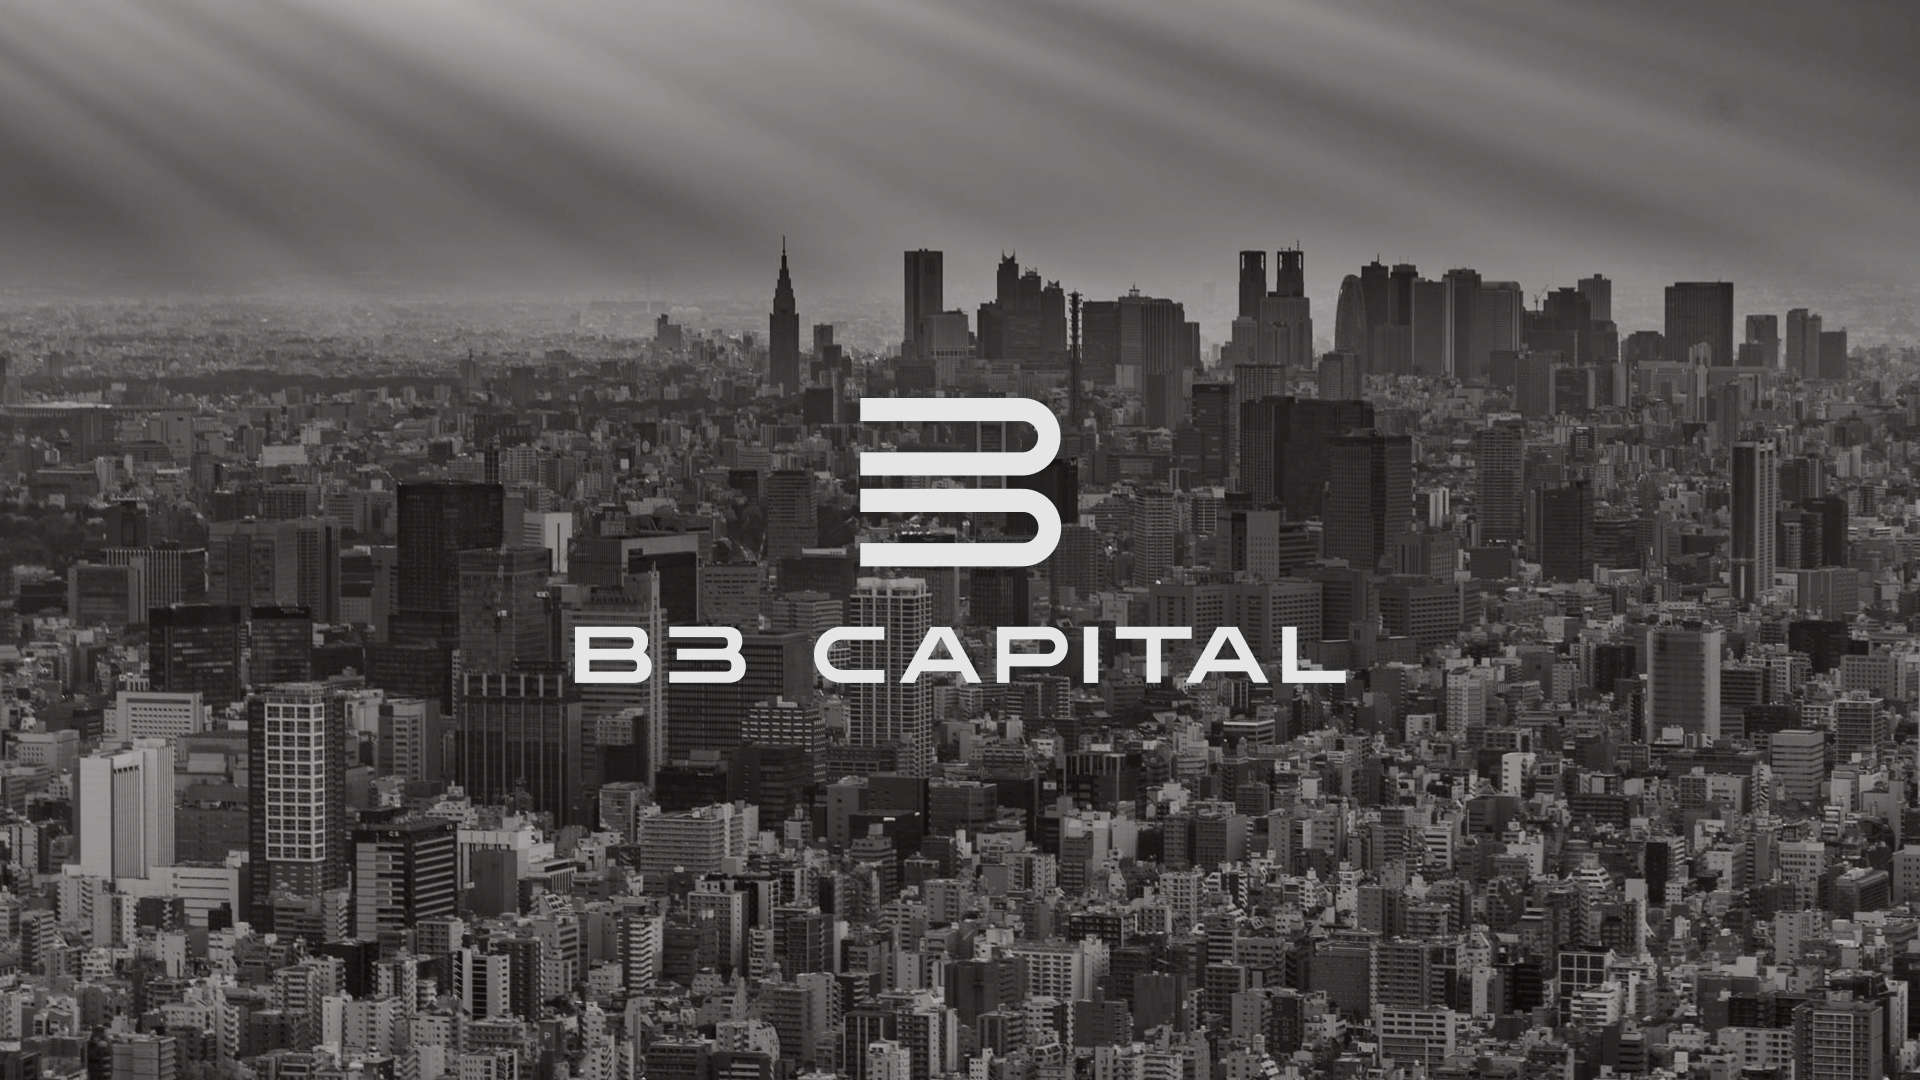 B3 Capital